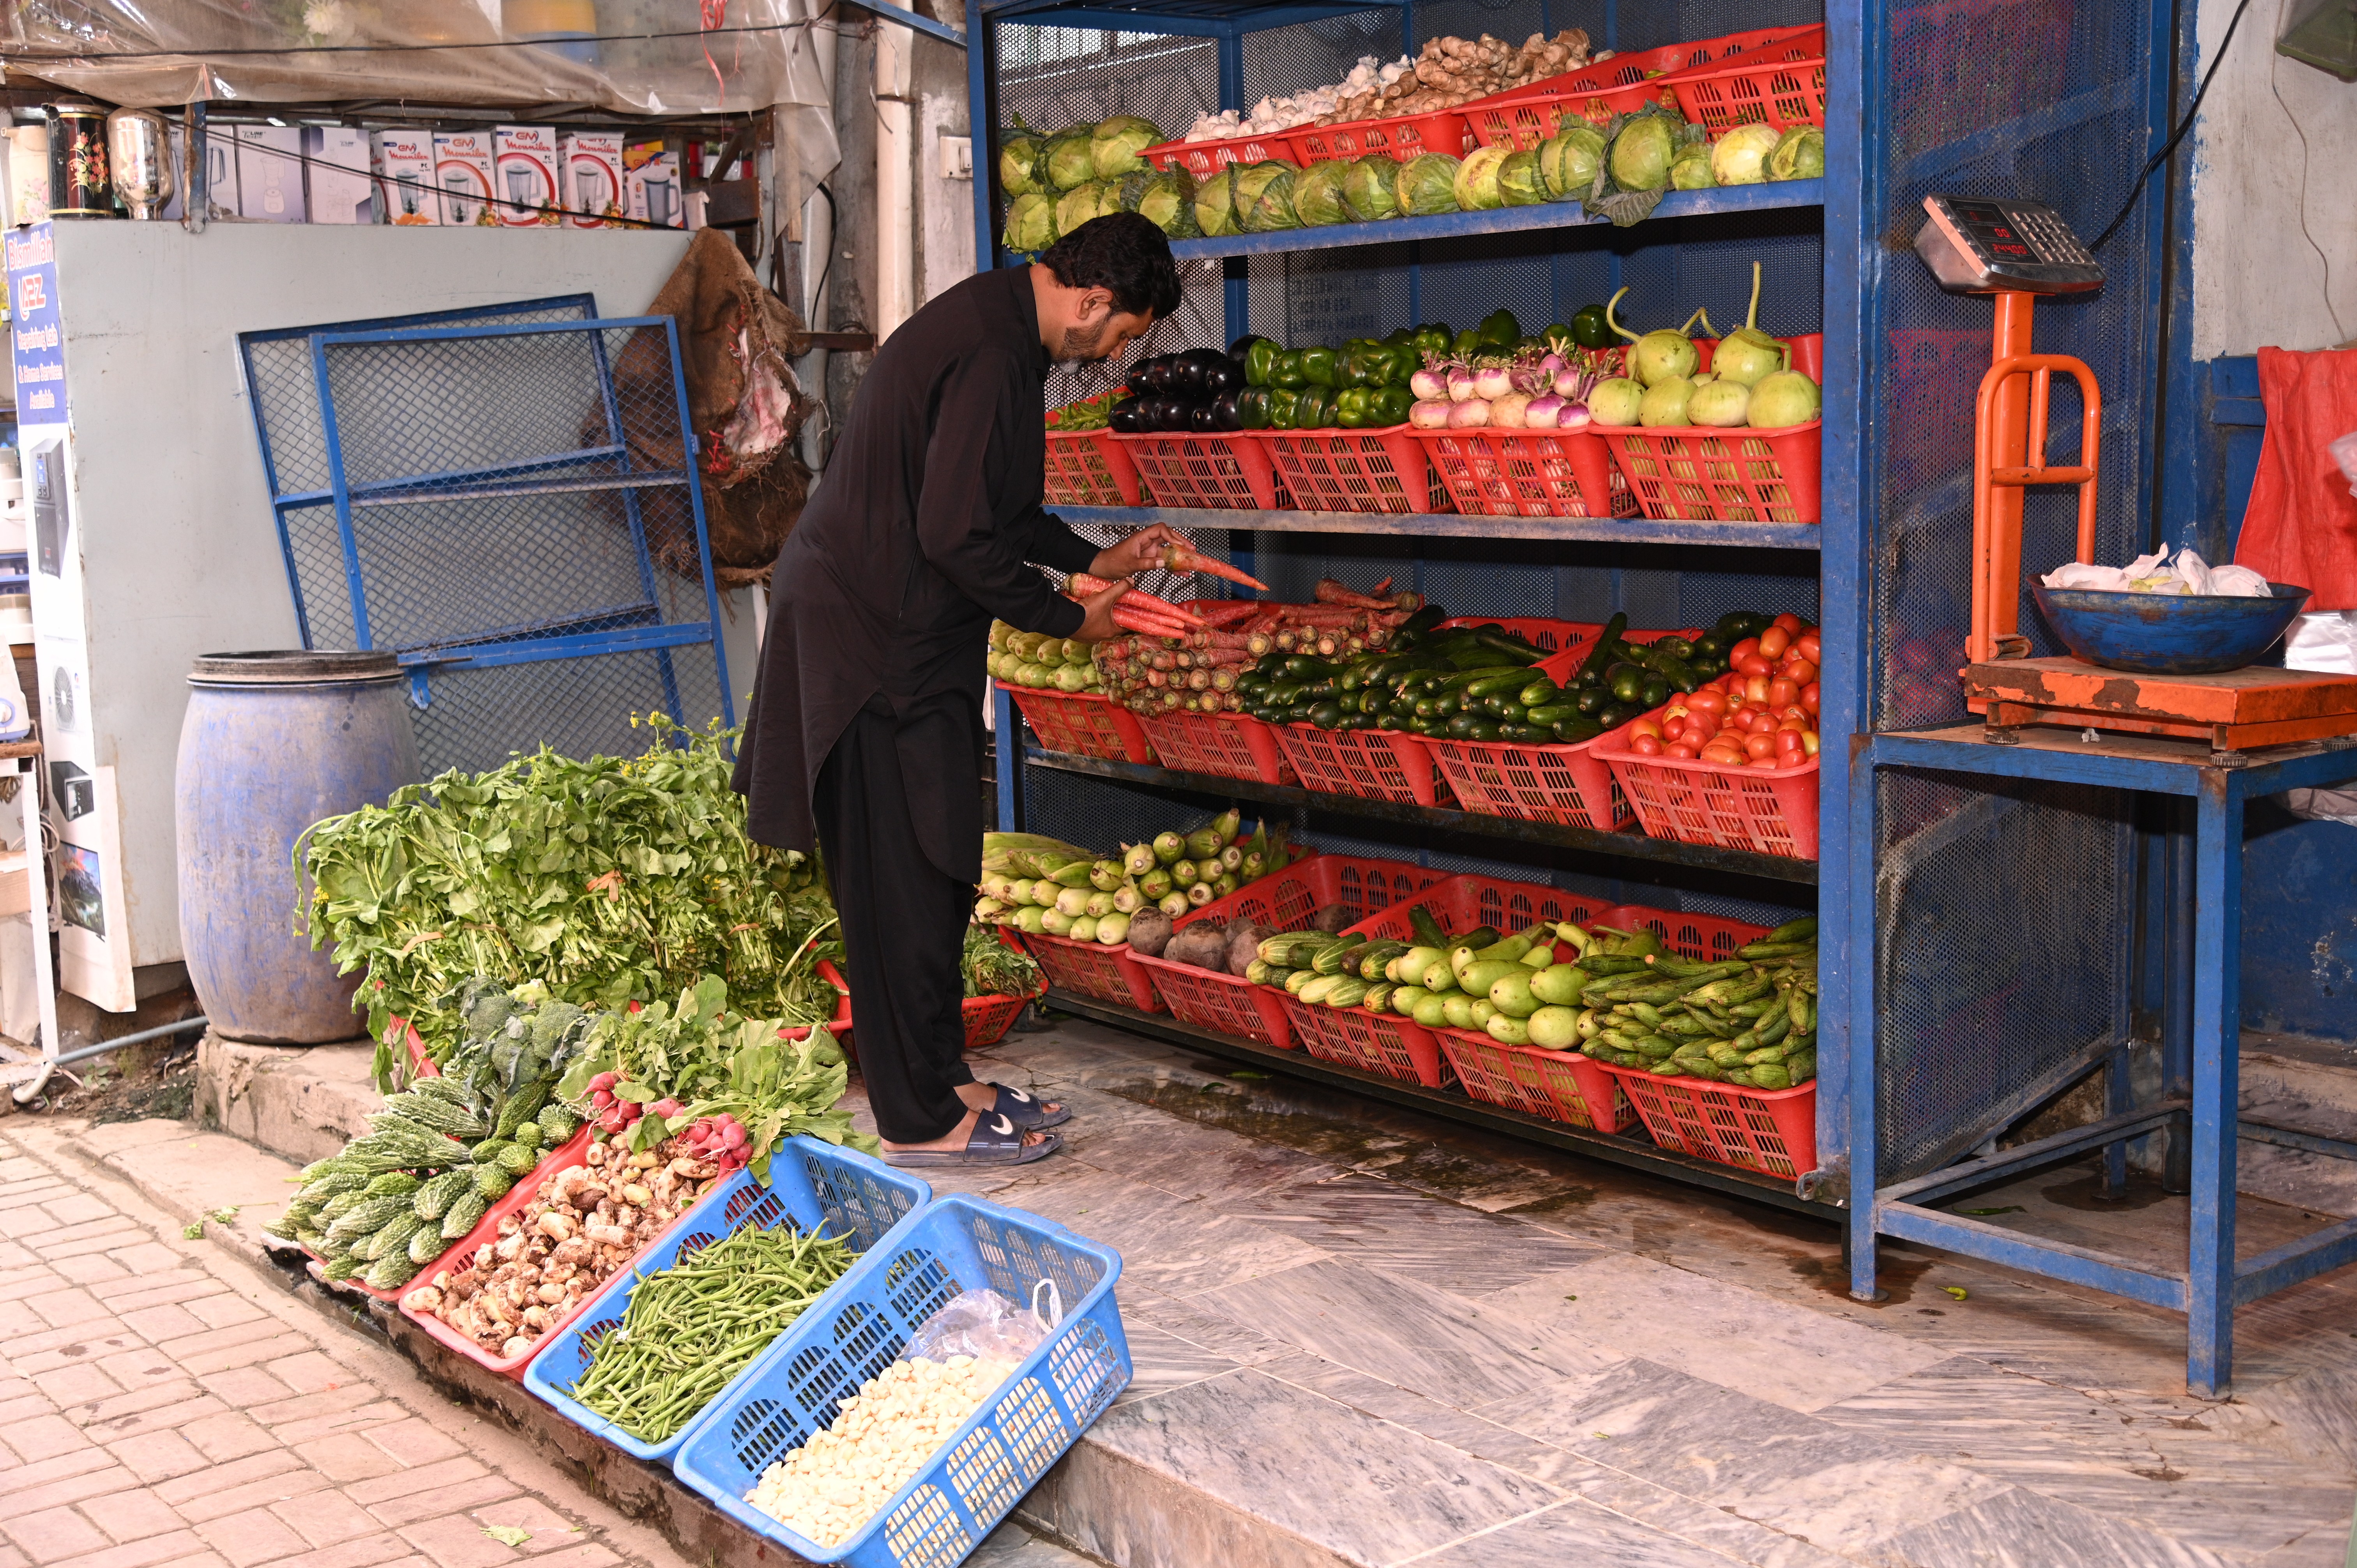 A vendor setting up fresh vegetables